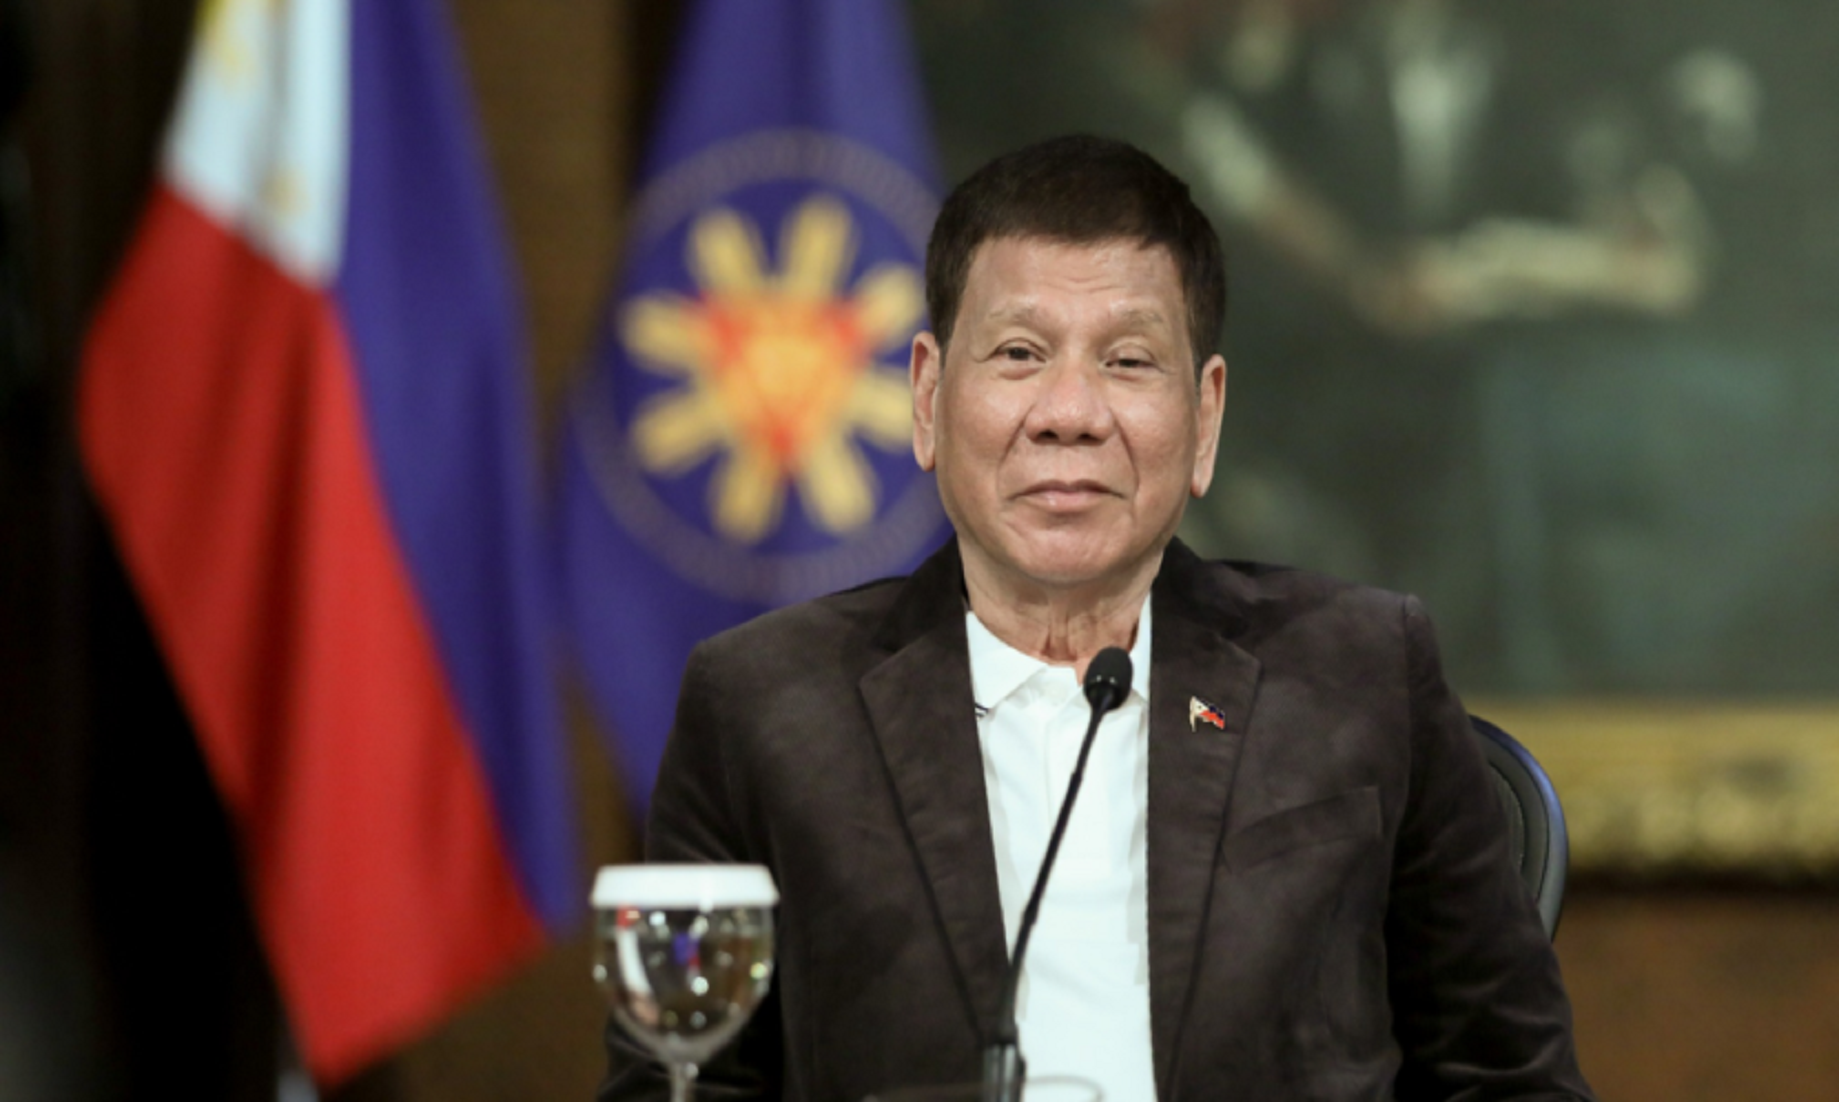 Philippine President Duterte Calls For Stronger Partnership To Recover From Pandemic